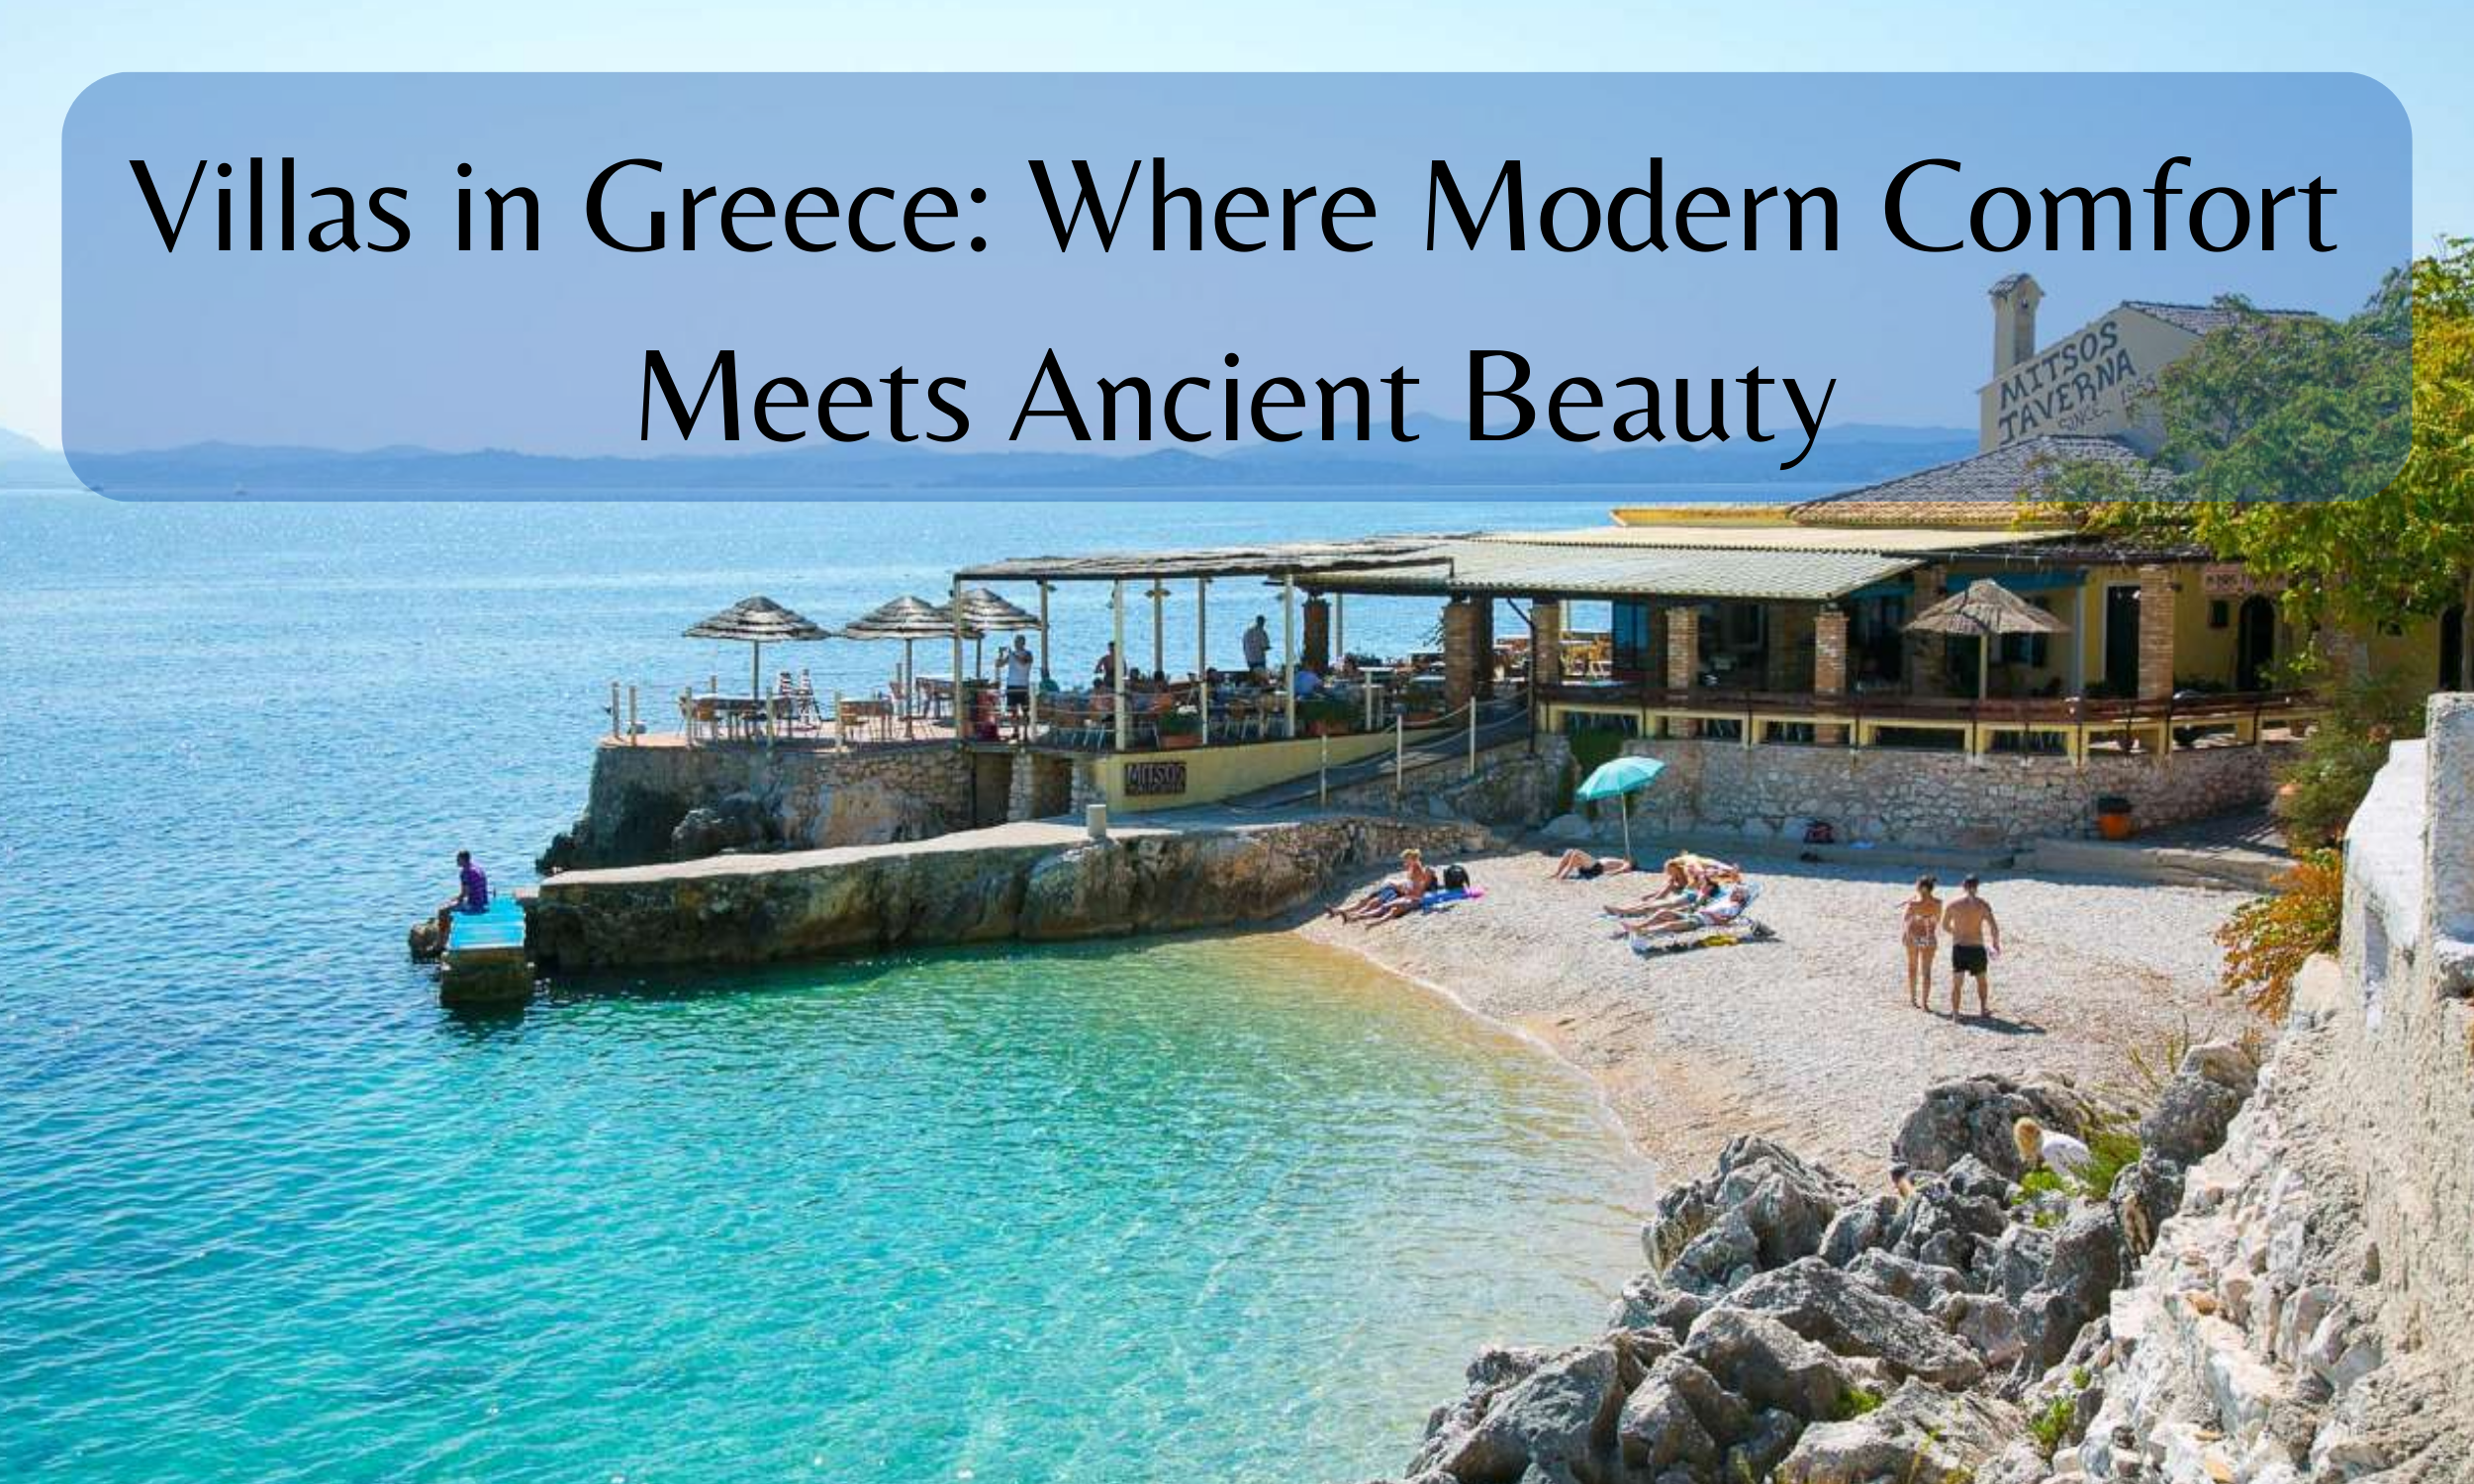 Villas in Greece: Where Modern Comfort Meets Ancient Beauty